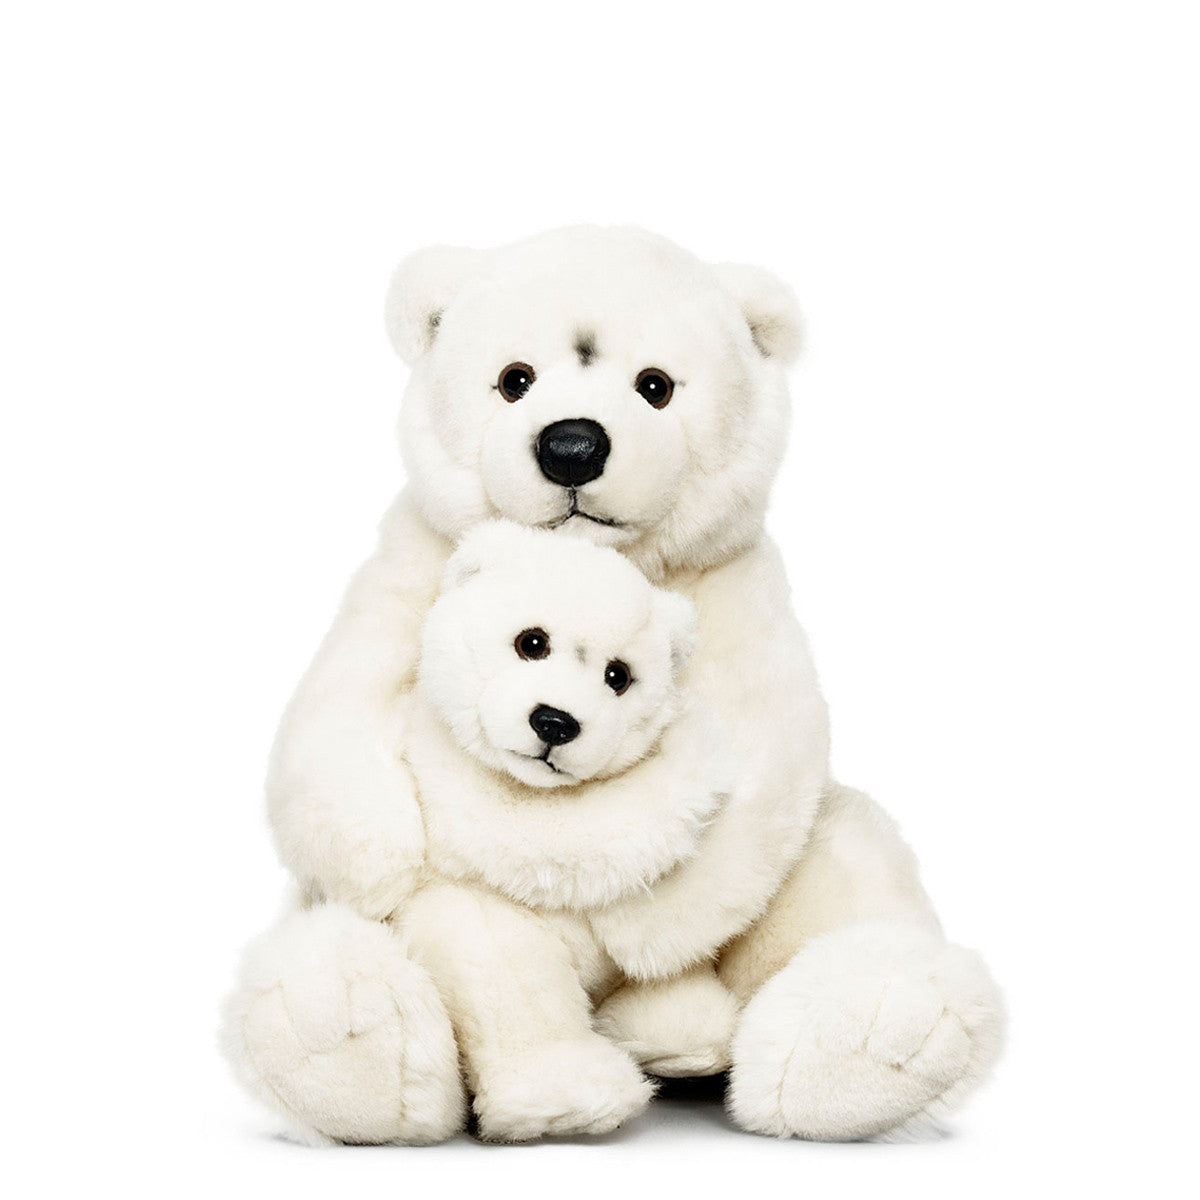 Protecting Polar Bear Families in the Den